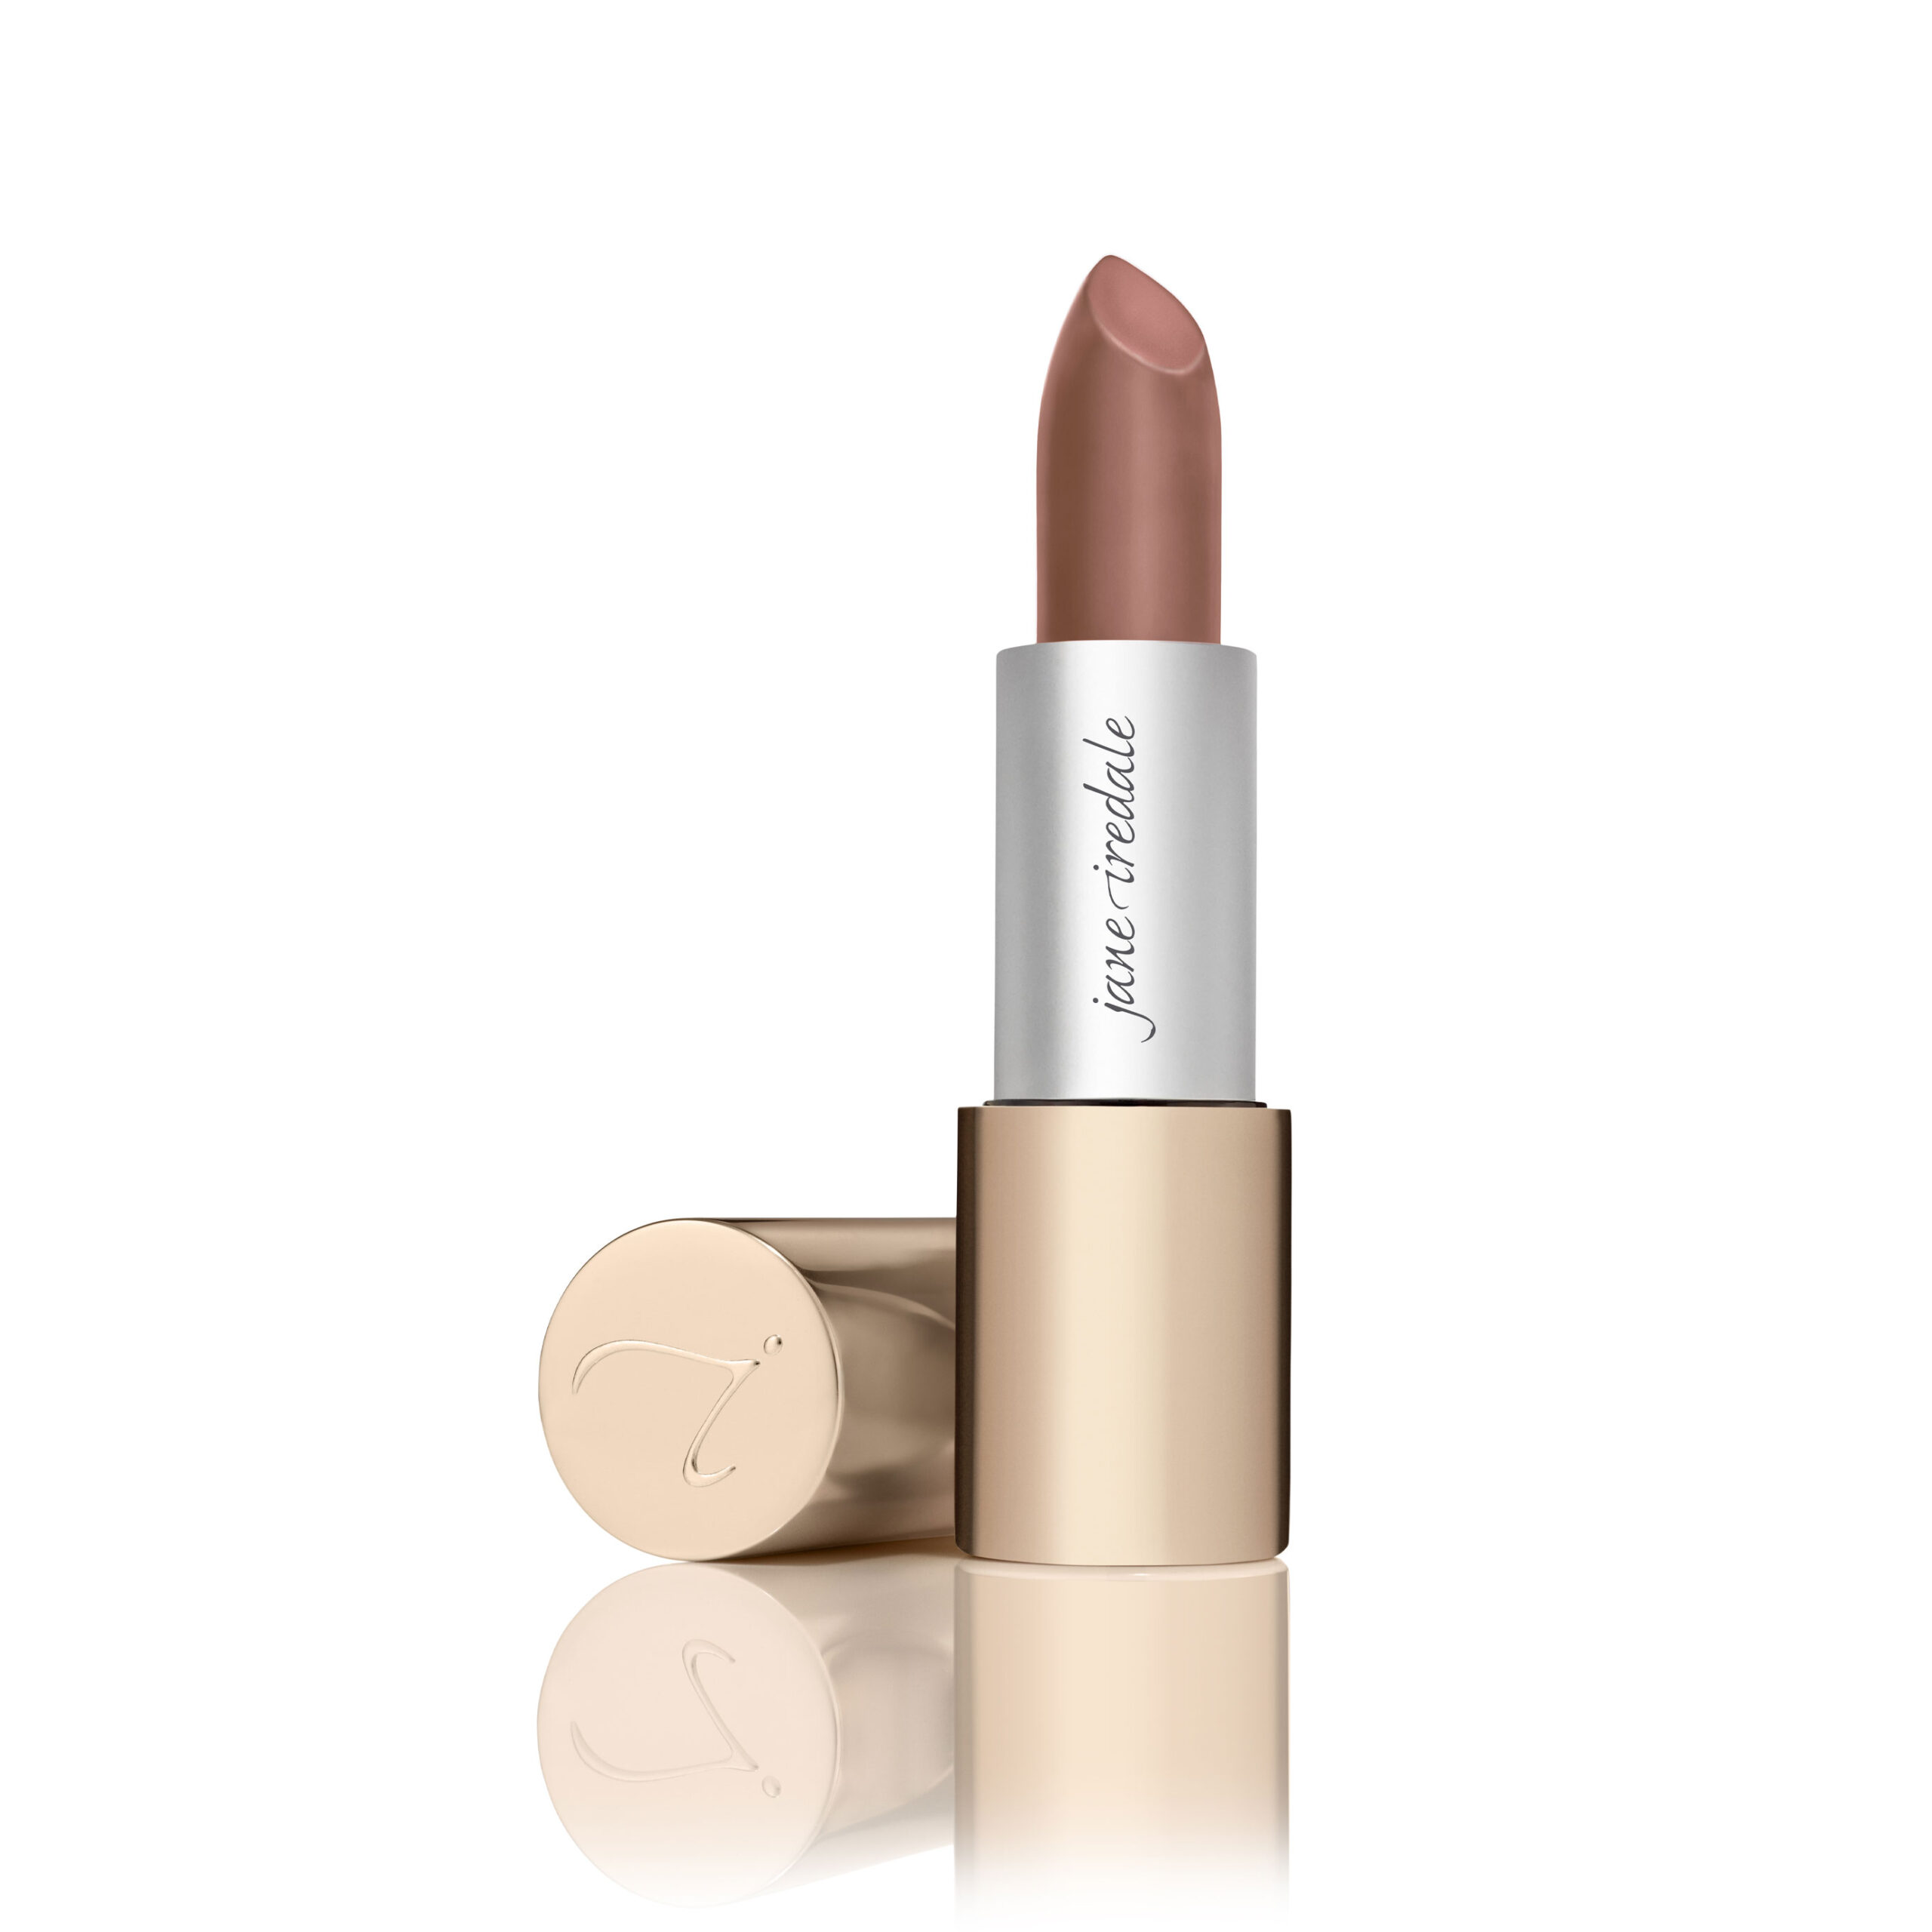 Triple Luxe Long Lasting Naturally Moist Lipstick - Jane Iredale